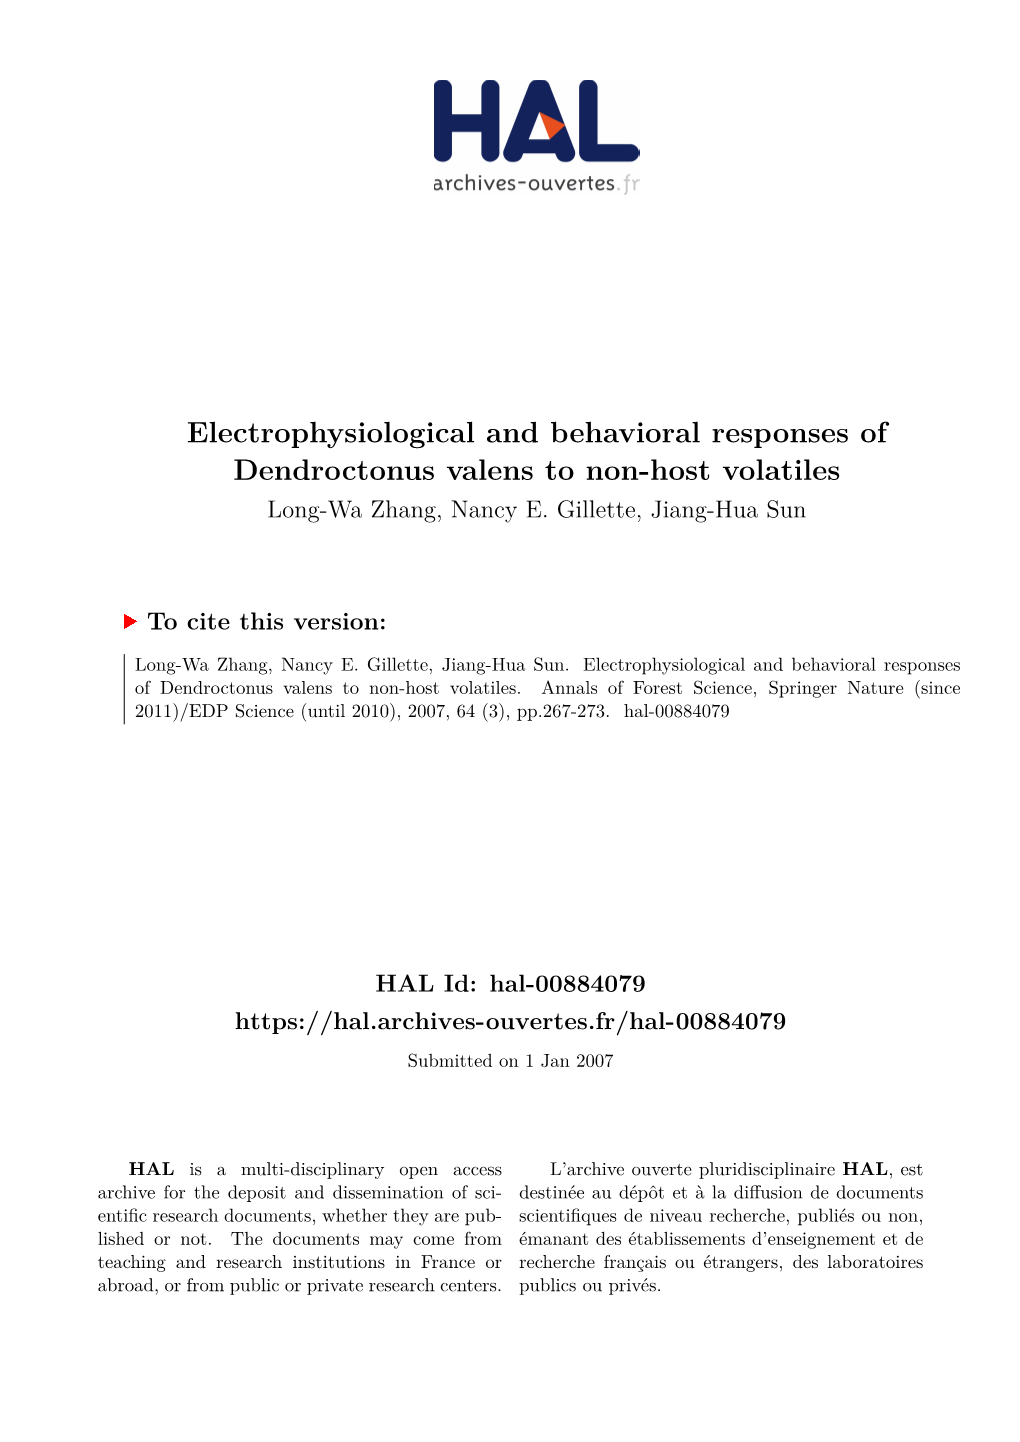 Electrophysiological and Behavioral Responses of Dendroctonus Valens to Non-Host Volatiles Long-Wa Zhang, Nancy E